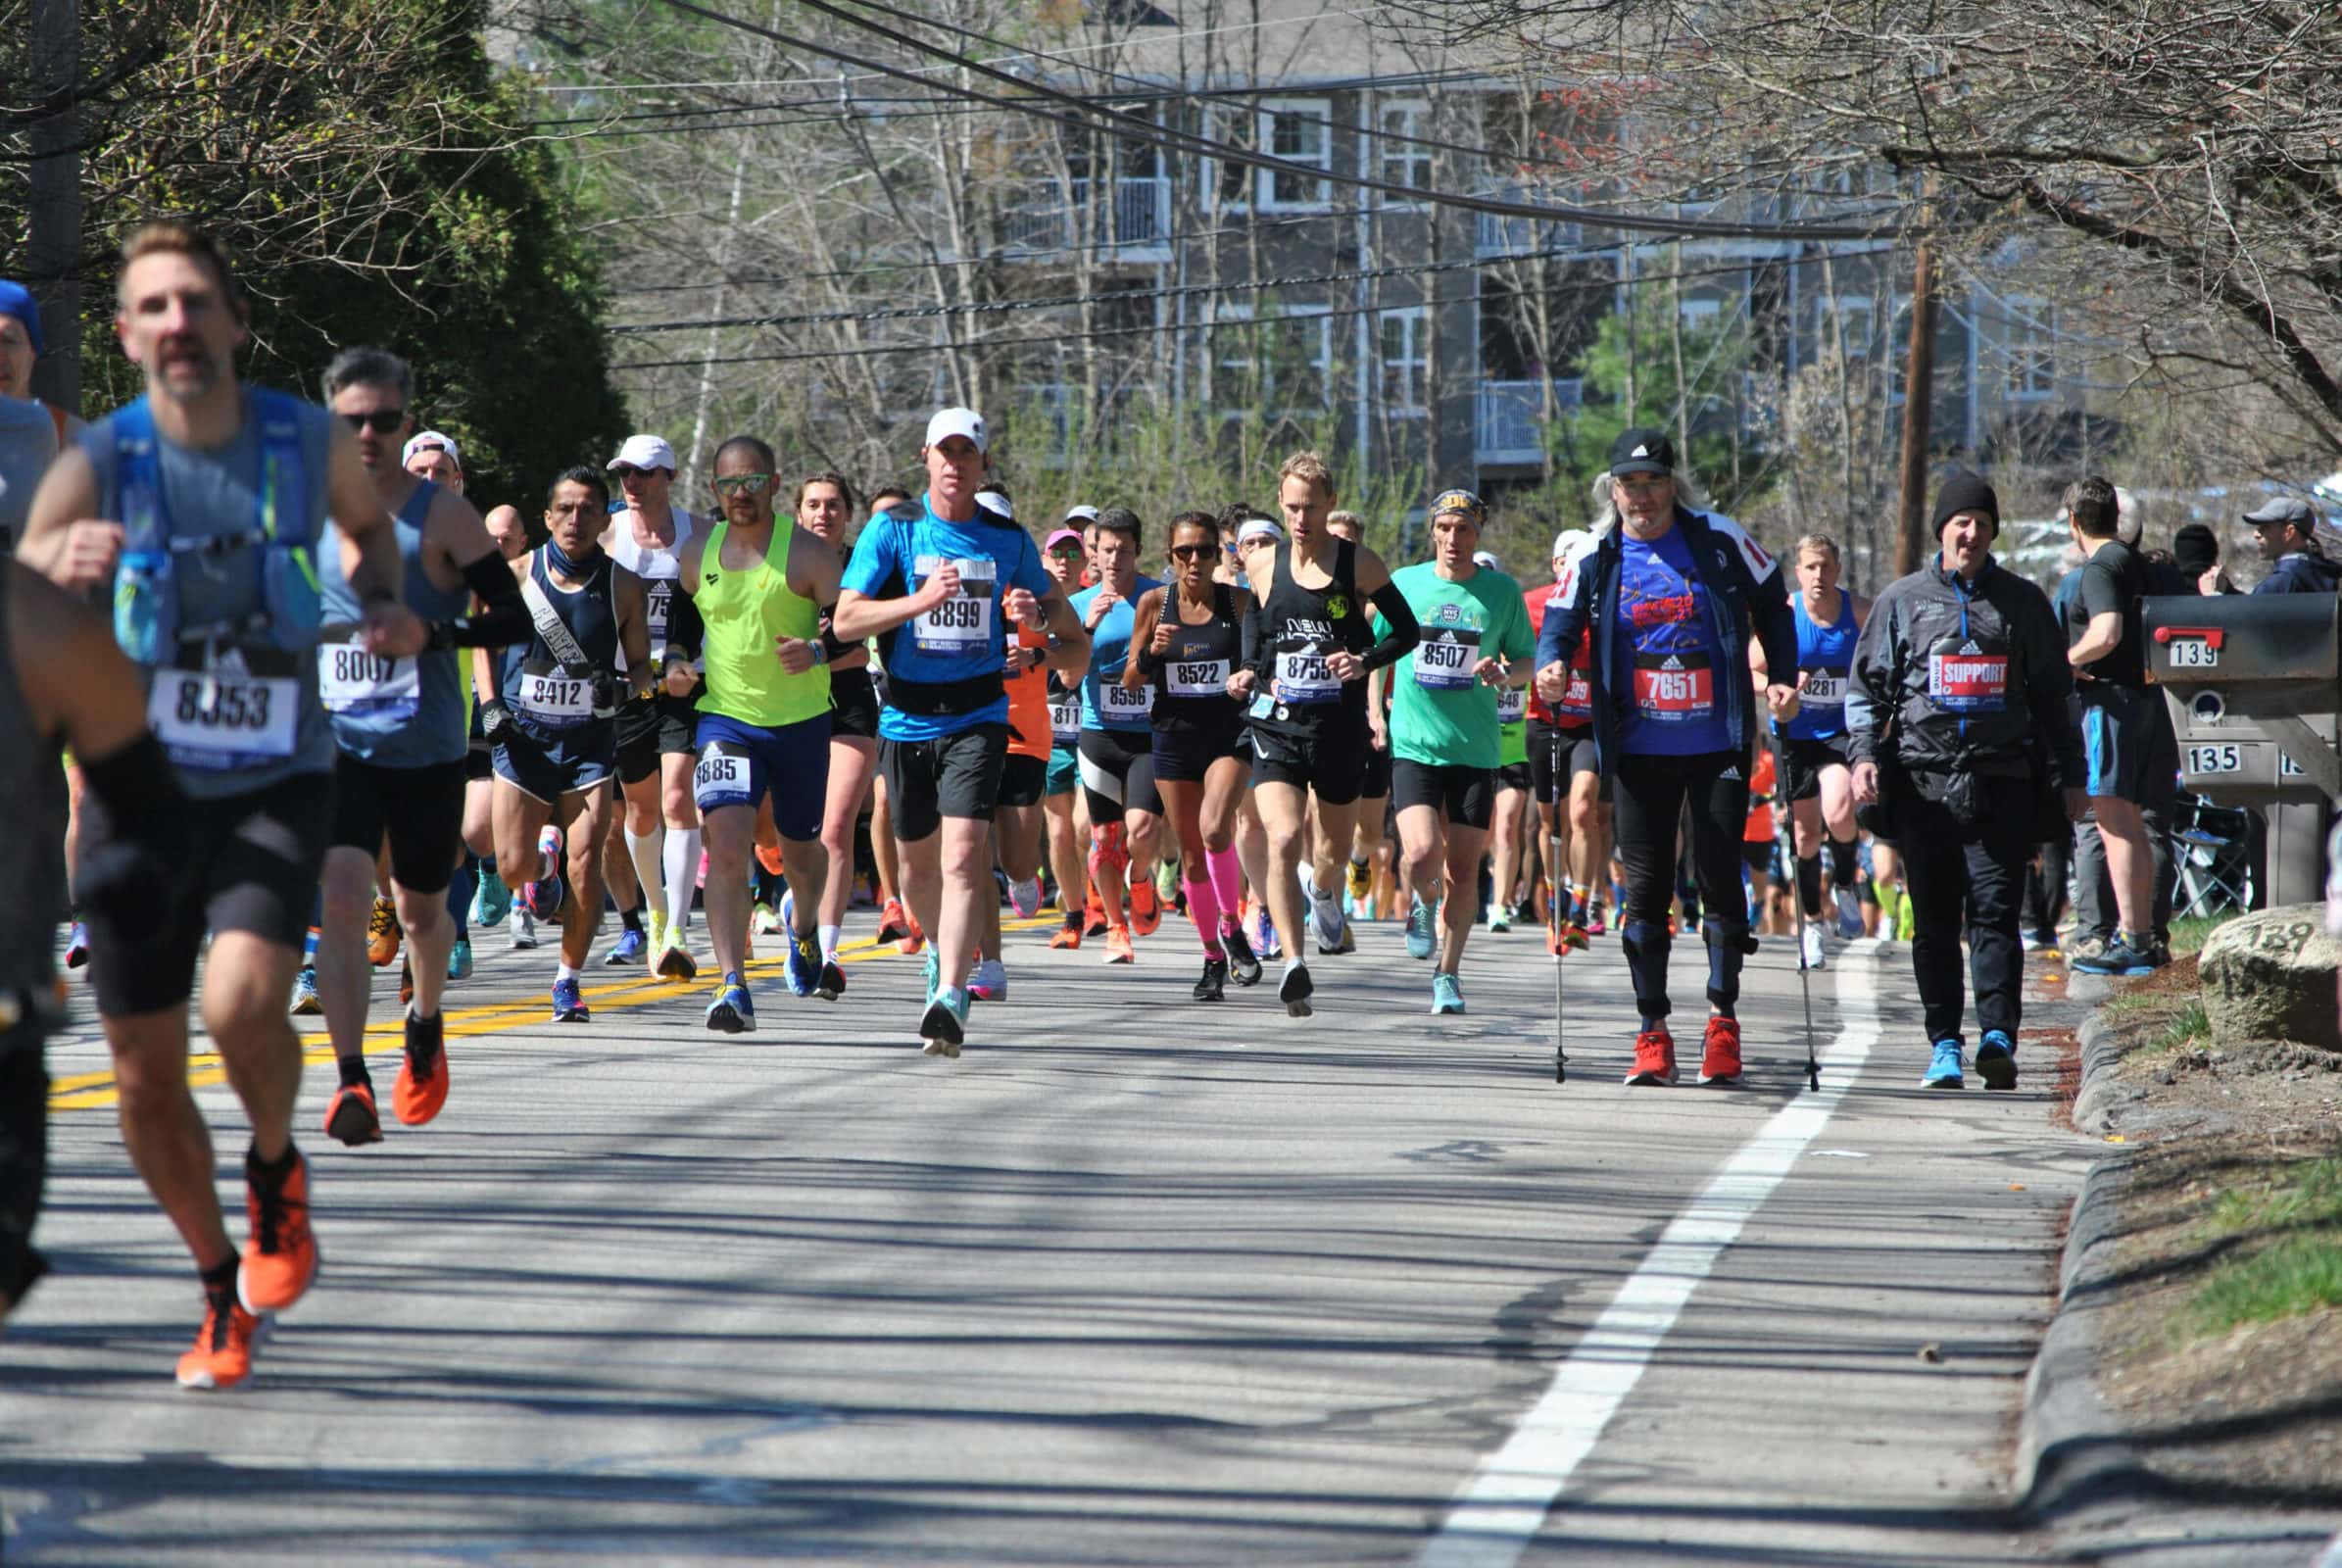 Local runners to participate in Boston Marathon